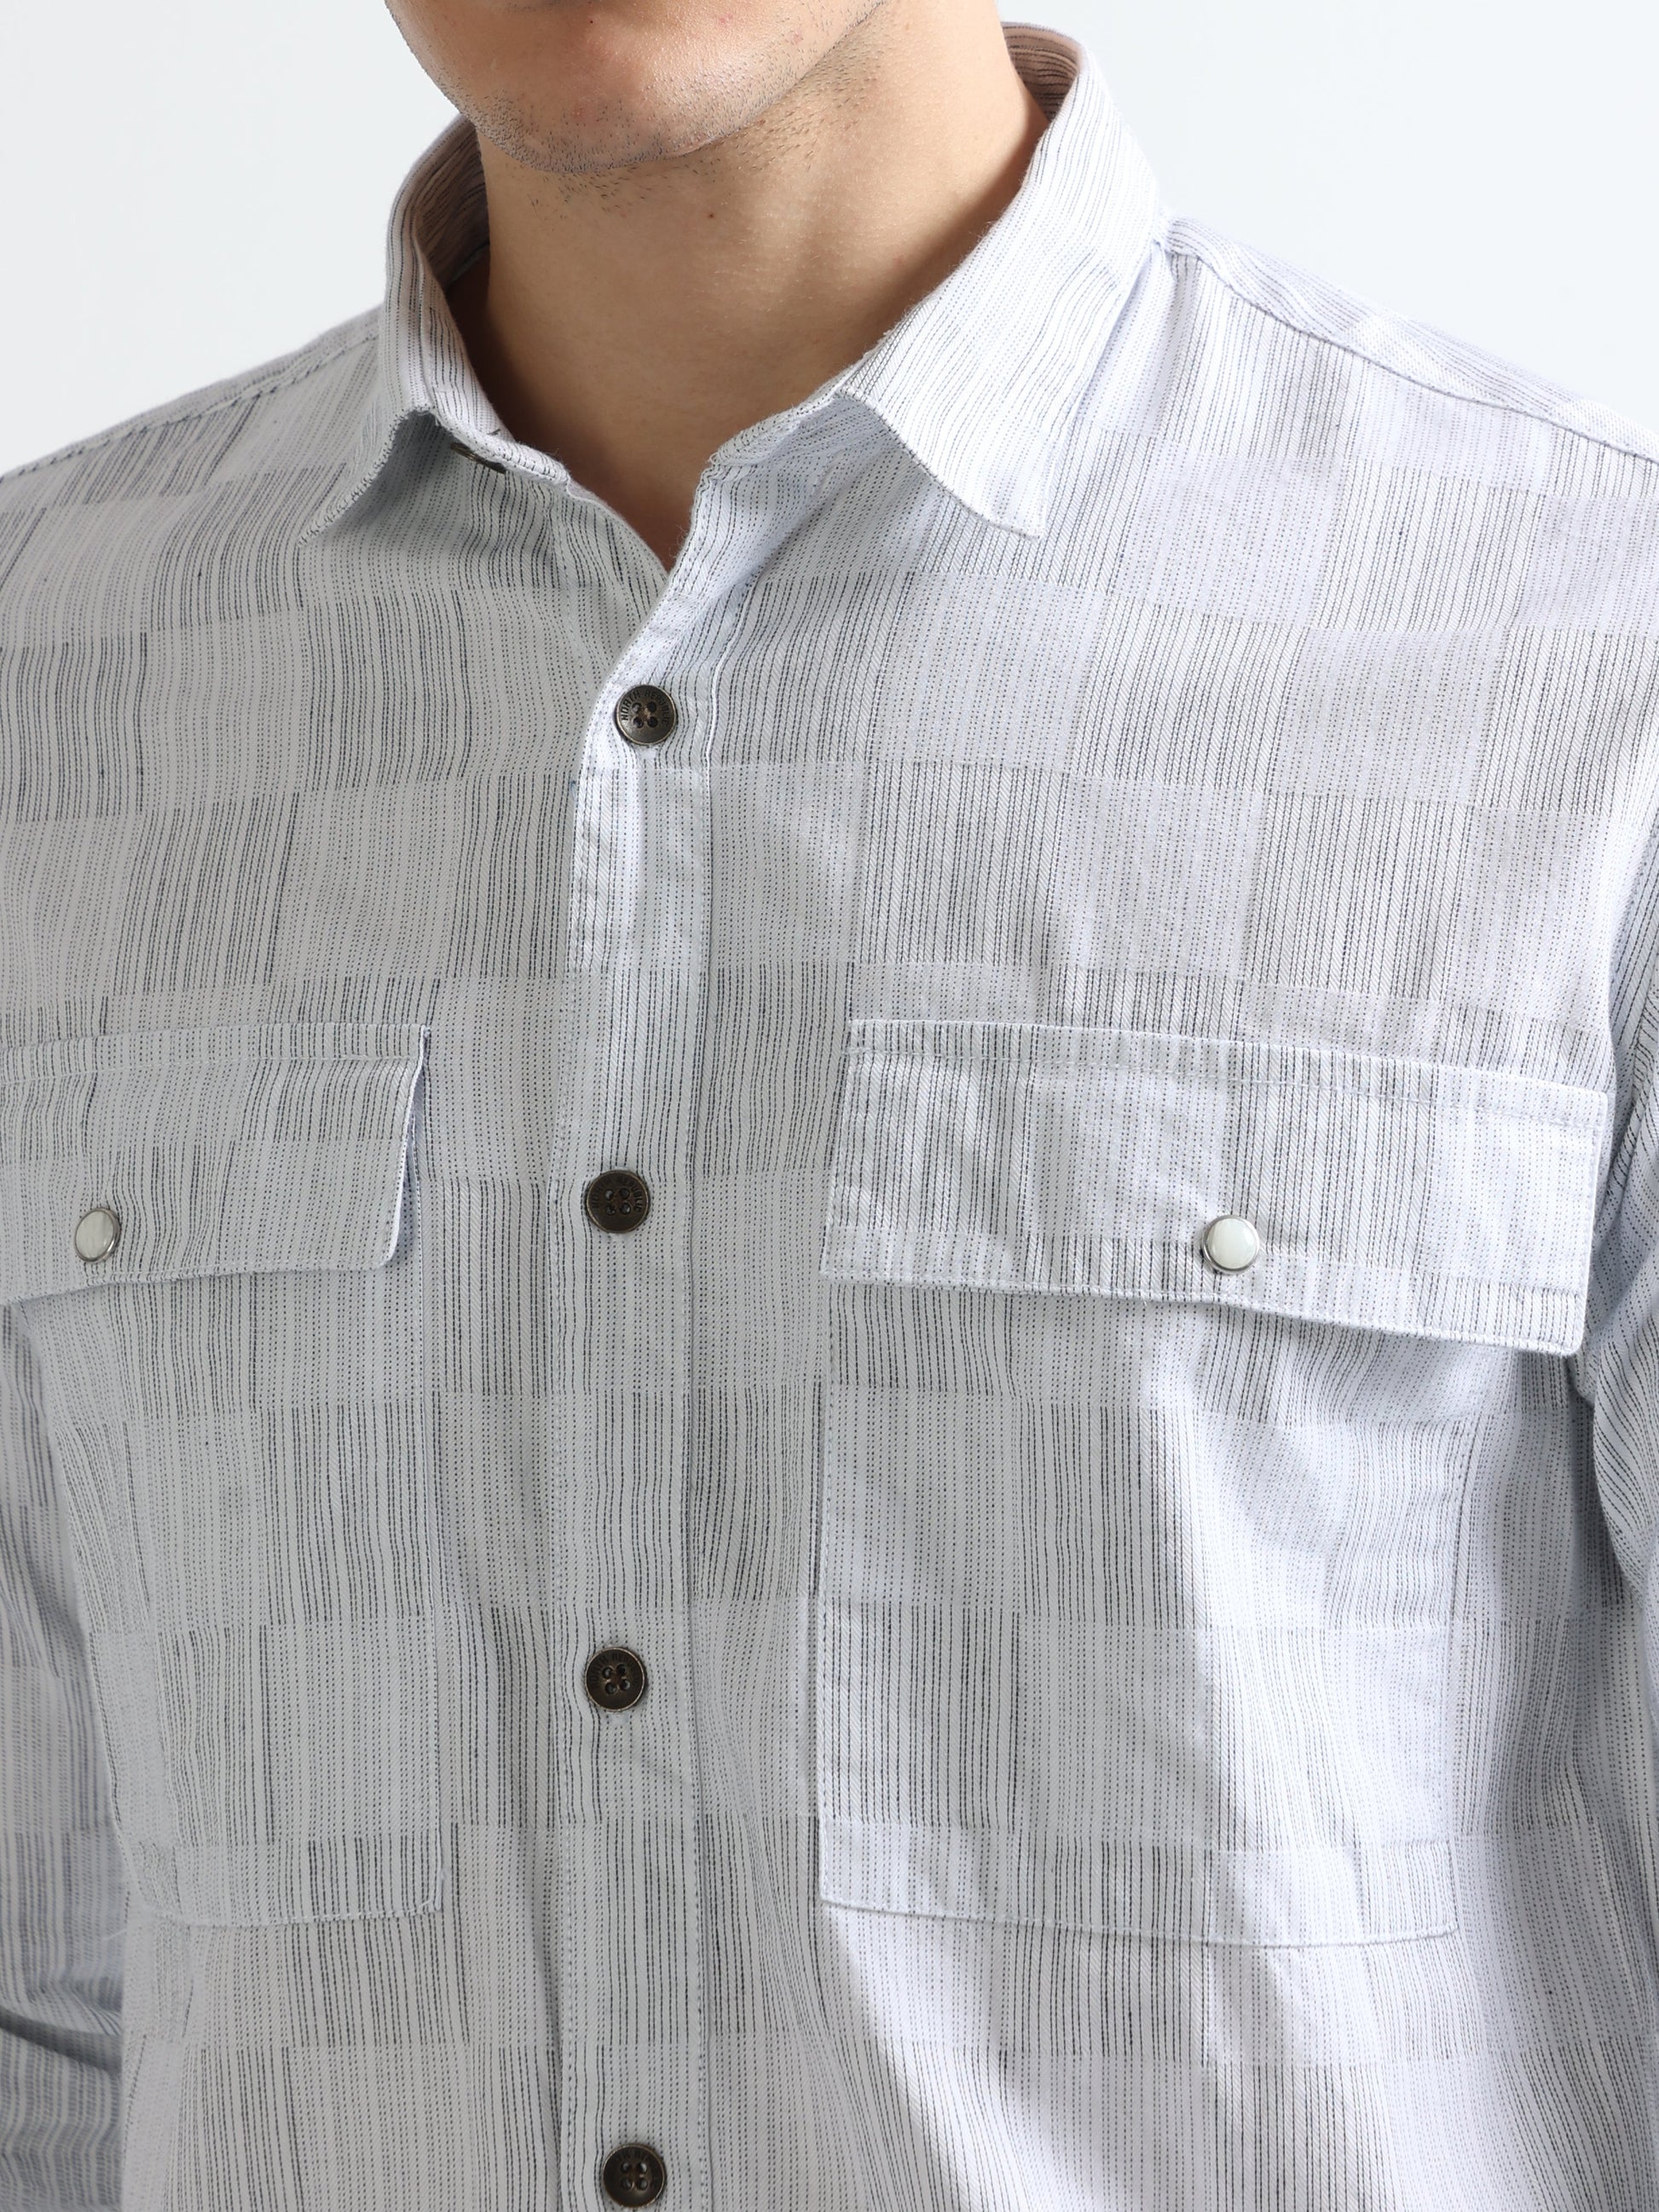 Buy Snap Button Double Pocket White Indigo Checked Shirt Online.